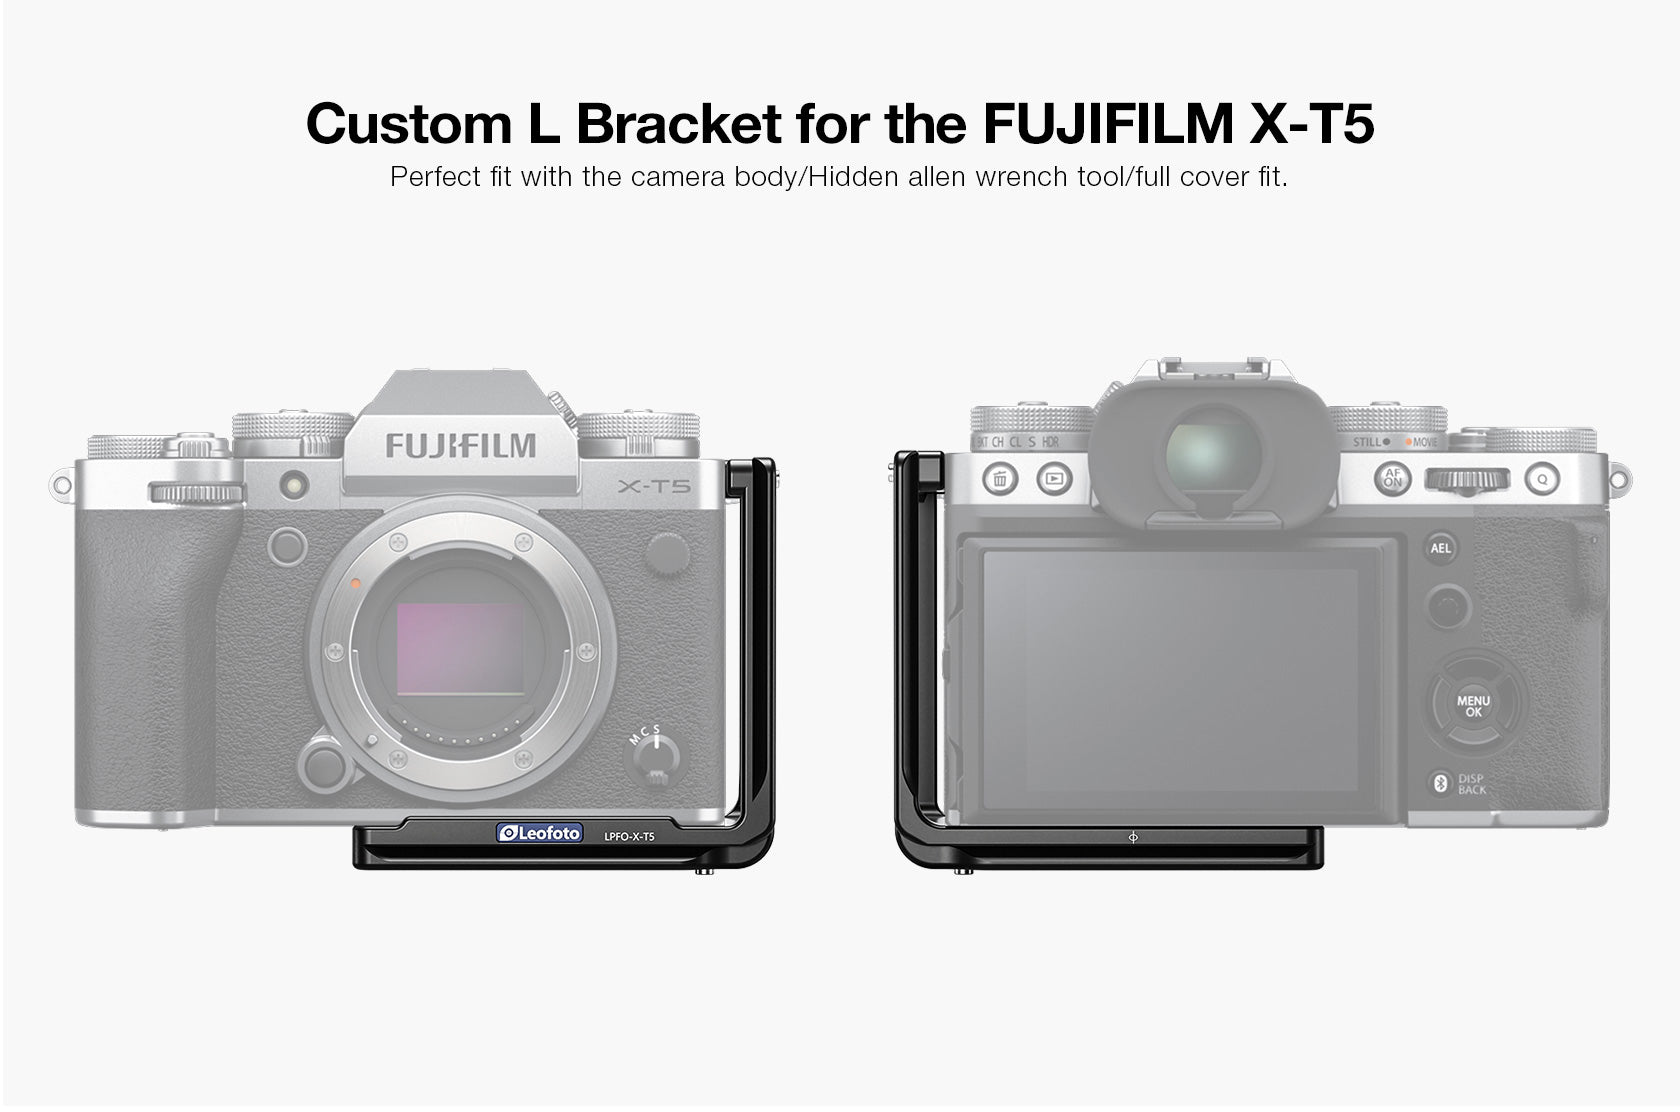 Leofoto LPFO-X-T5 L Plate for Fujifilm X-T5 | Arca Compatible